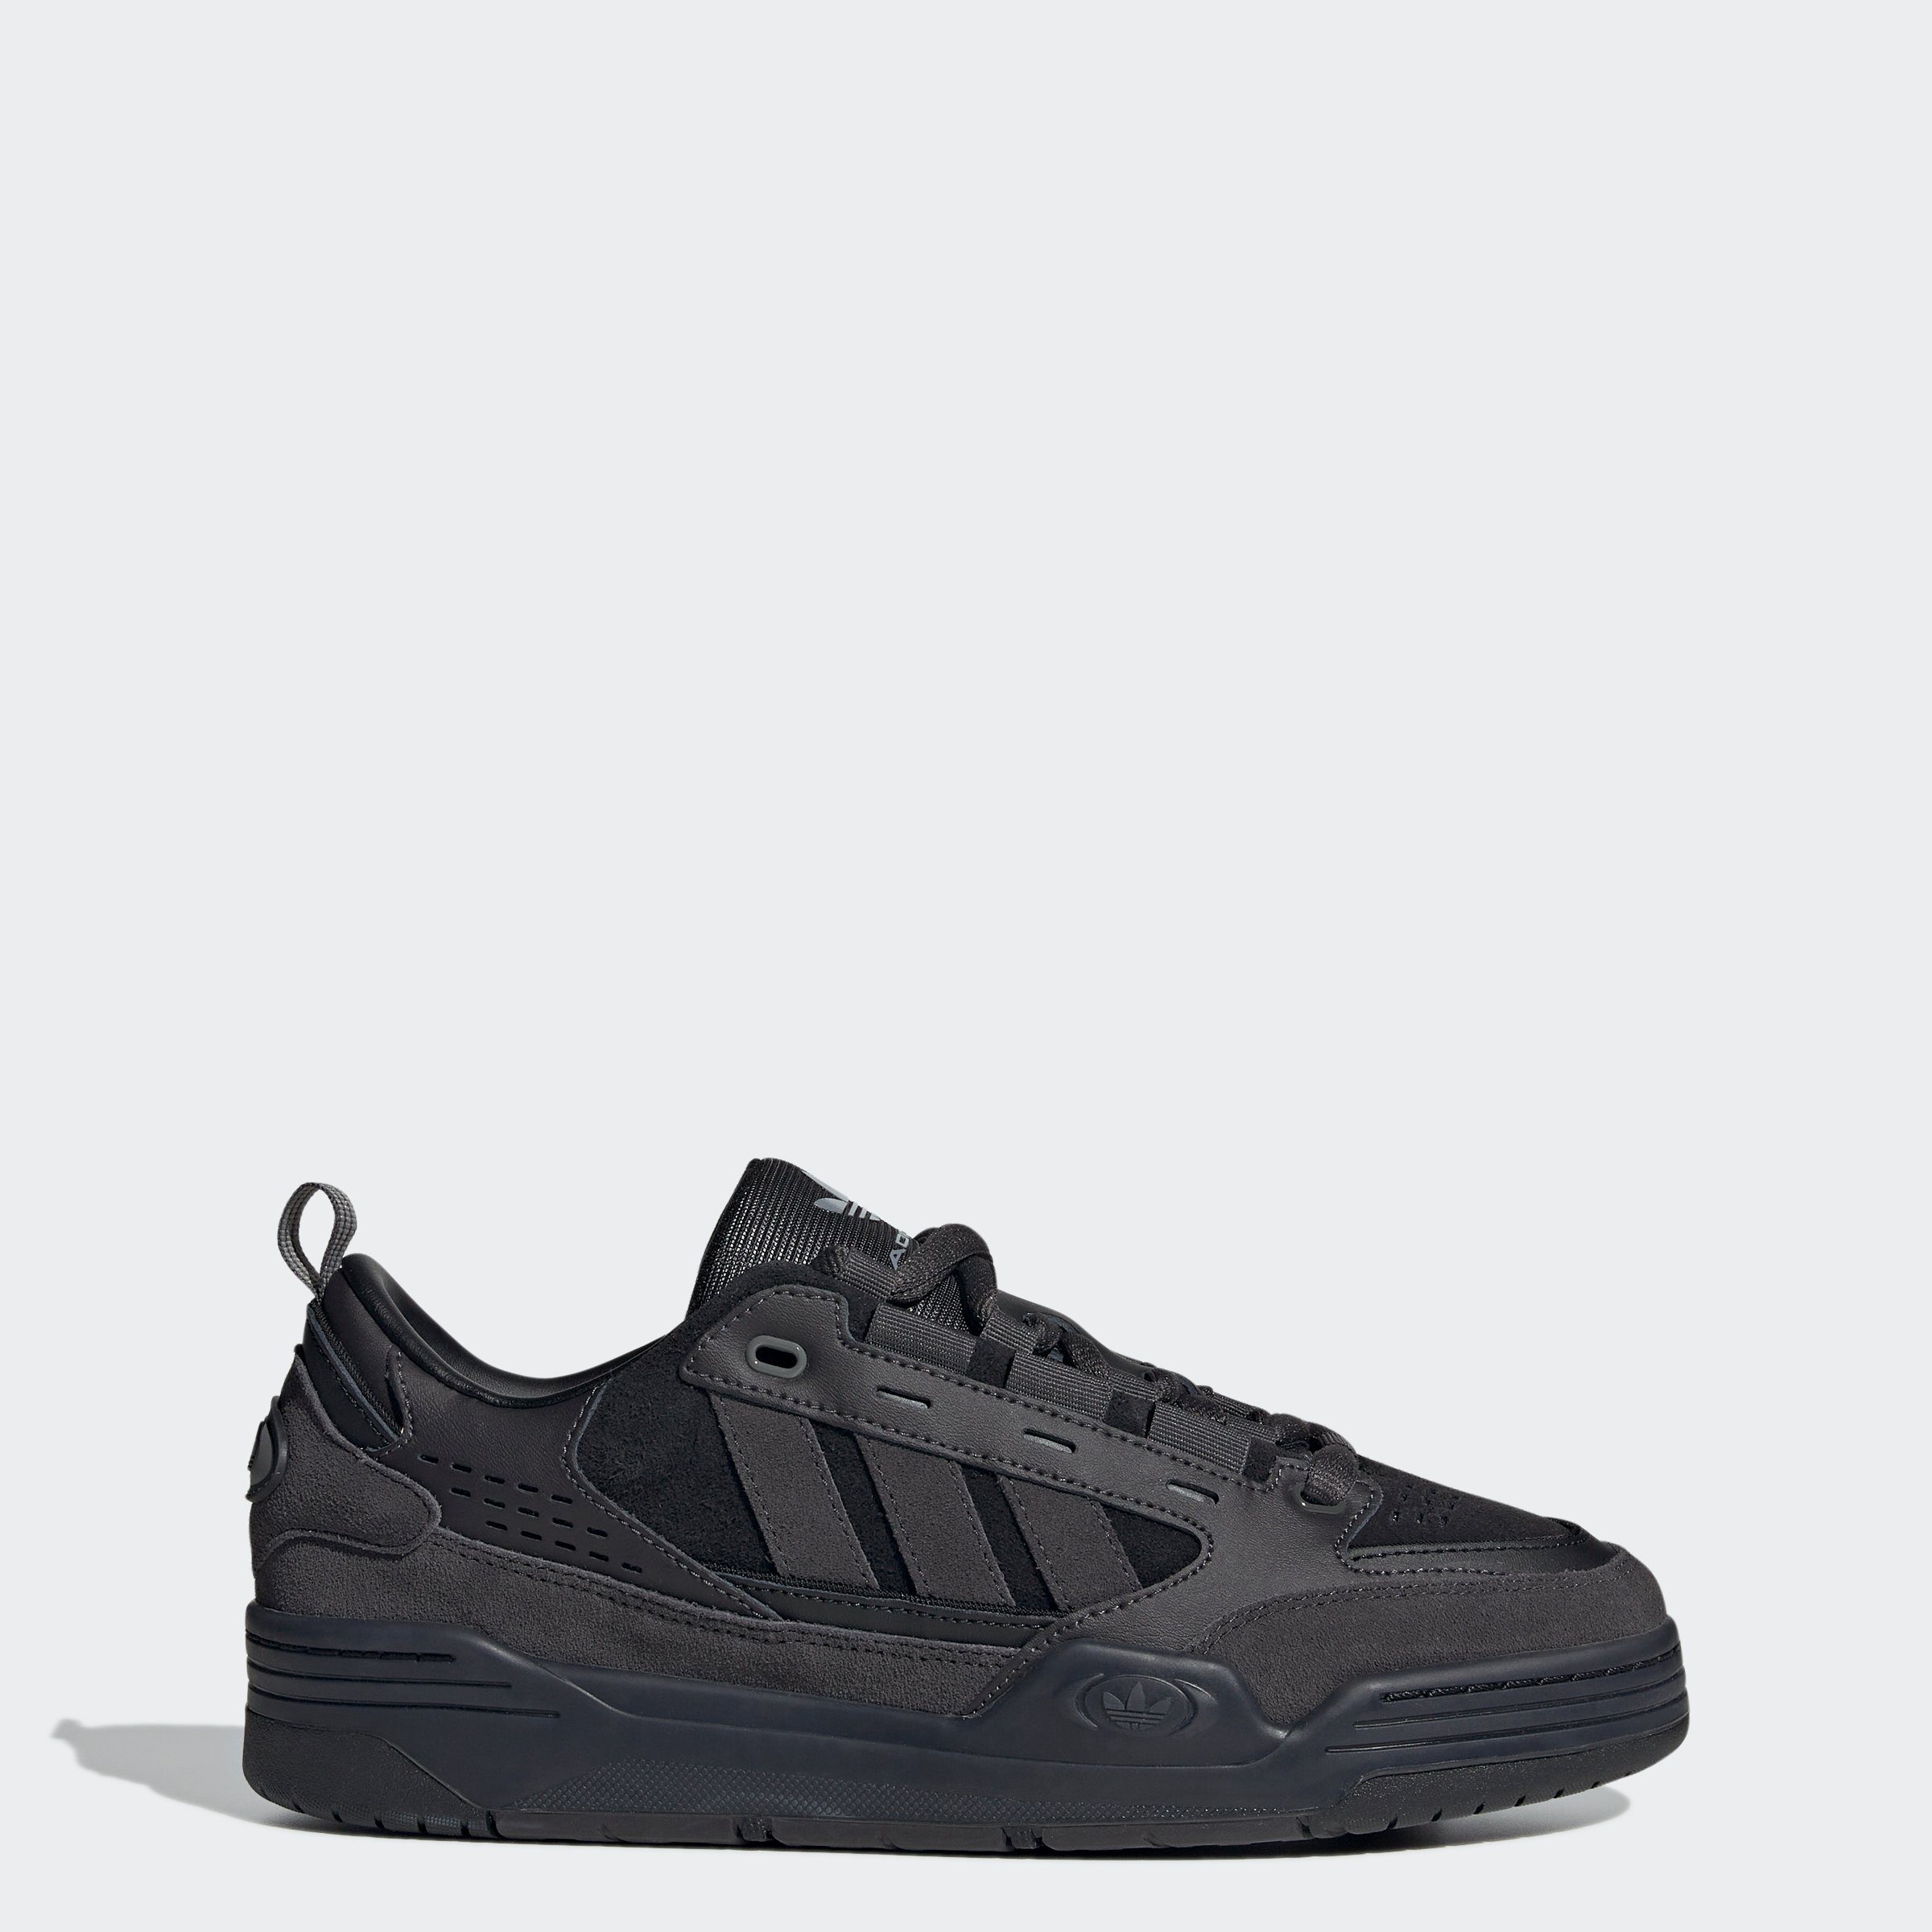 adidas Originals / Black Utility ADI2000 / Black Utility Sneaker Core Black